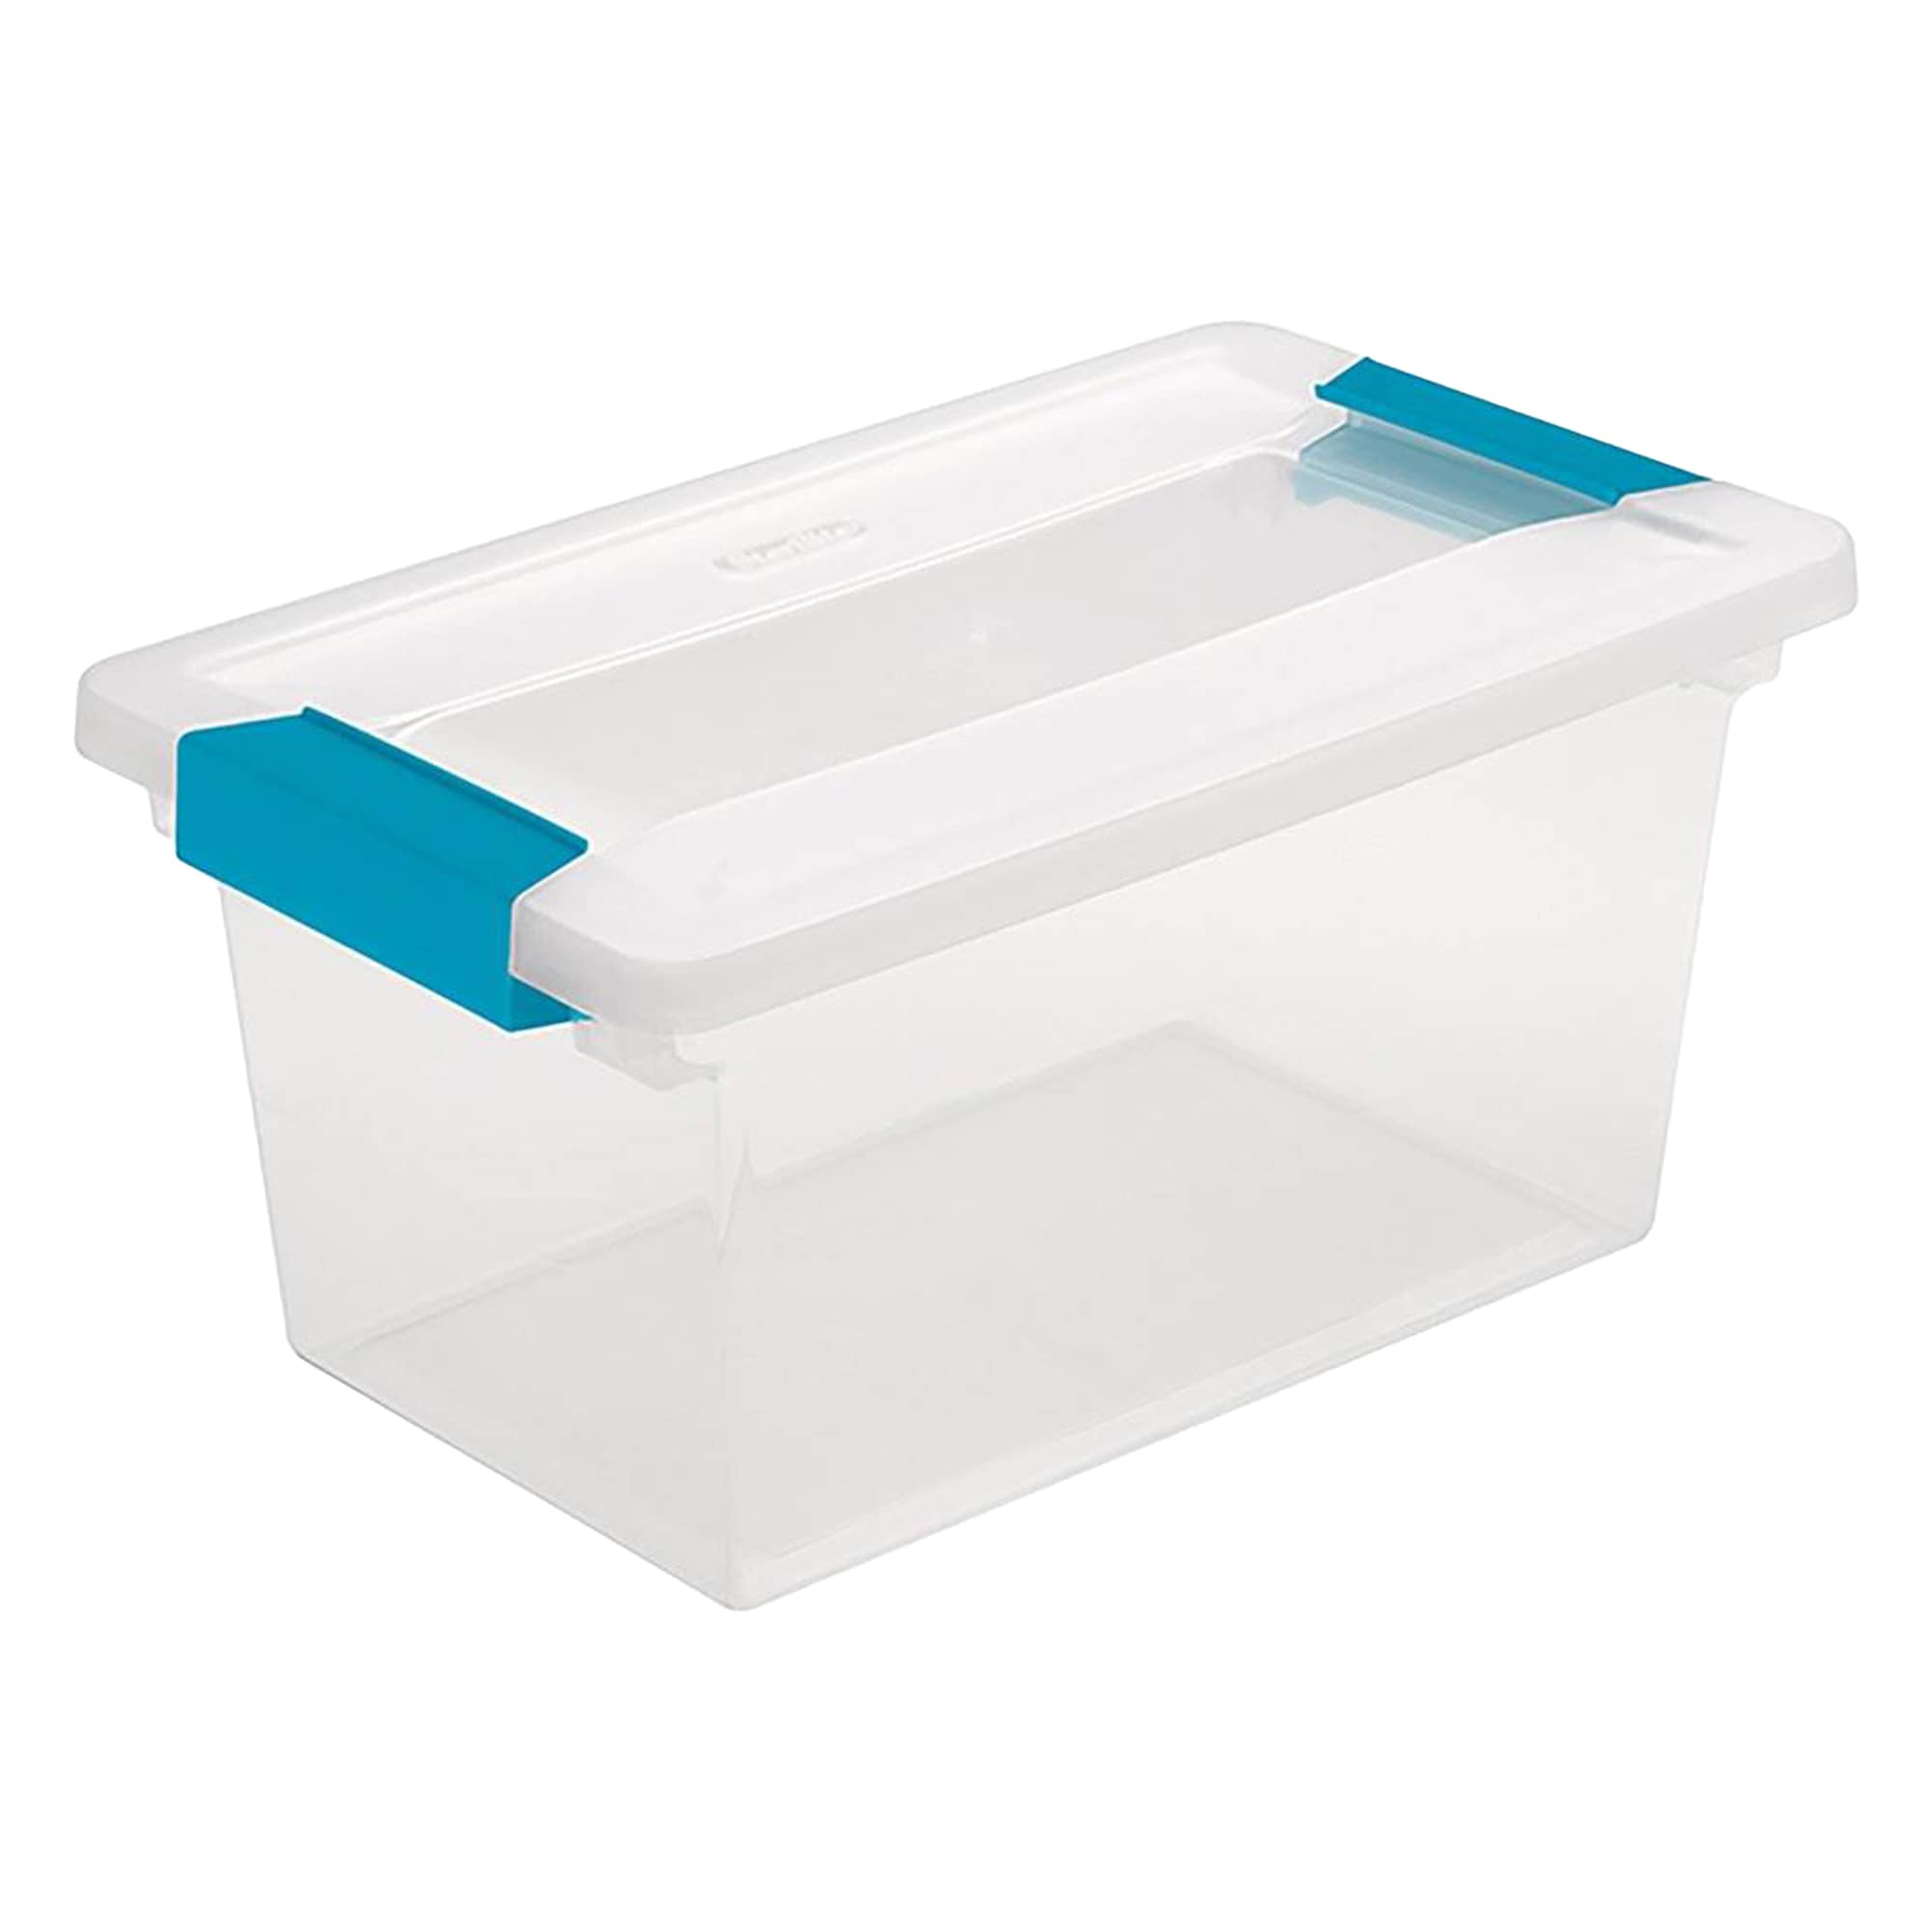 Sterilite 16-Qt. Teal & Clear Storage Boxes, 2-Pack